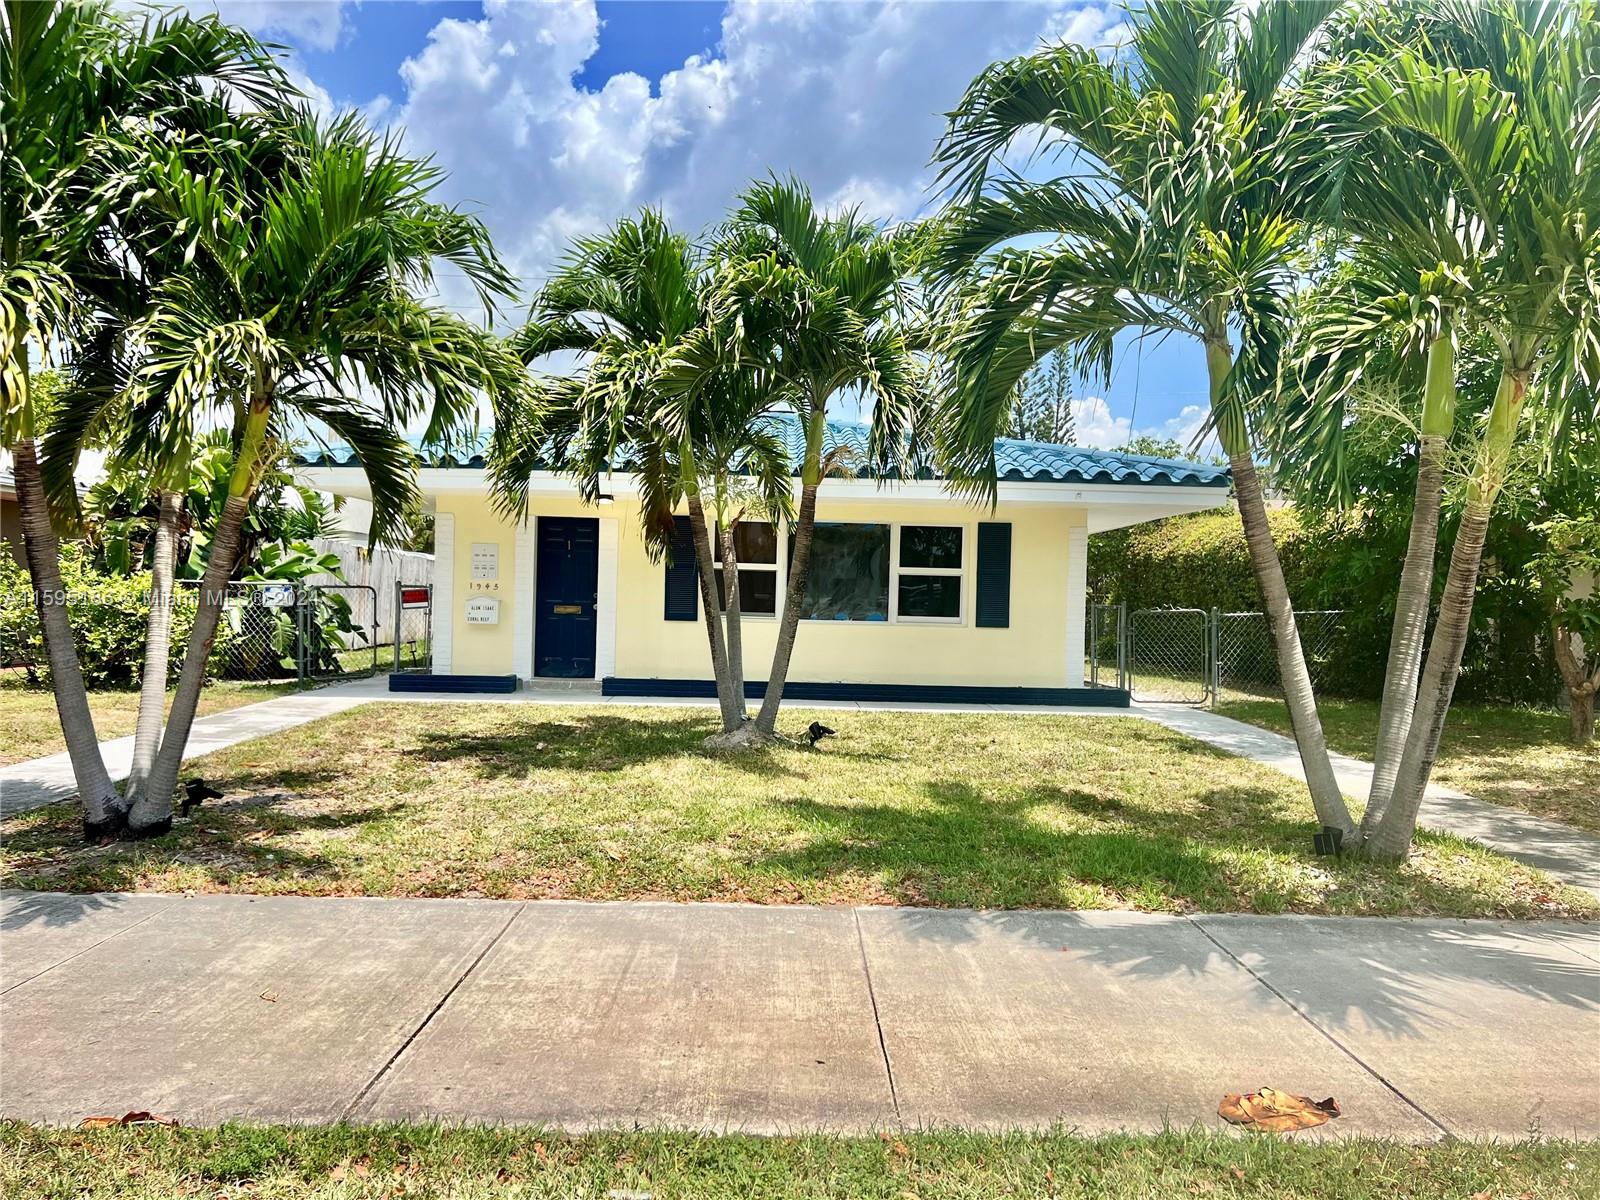 Rental Property at 1945 Ne 171st St, North Miami Beach, Miami-Dade County, Florida -  - $820,000 MO.